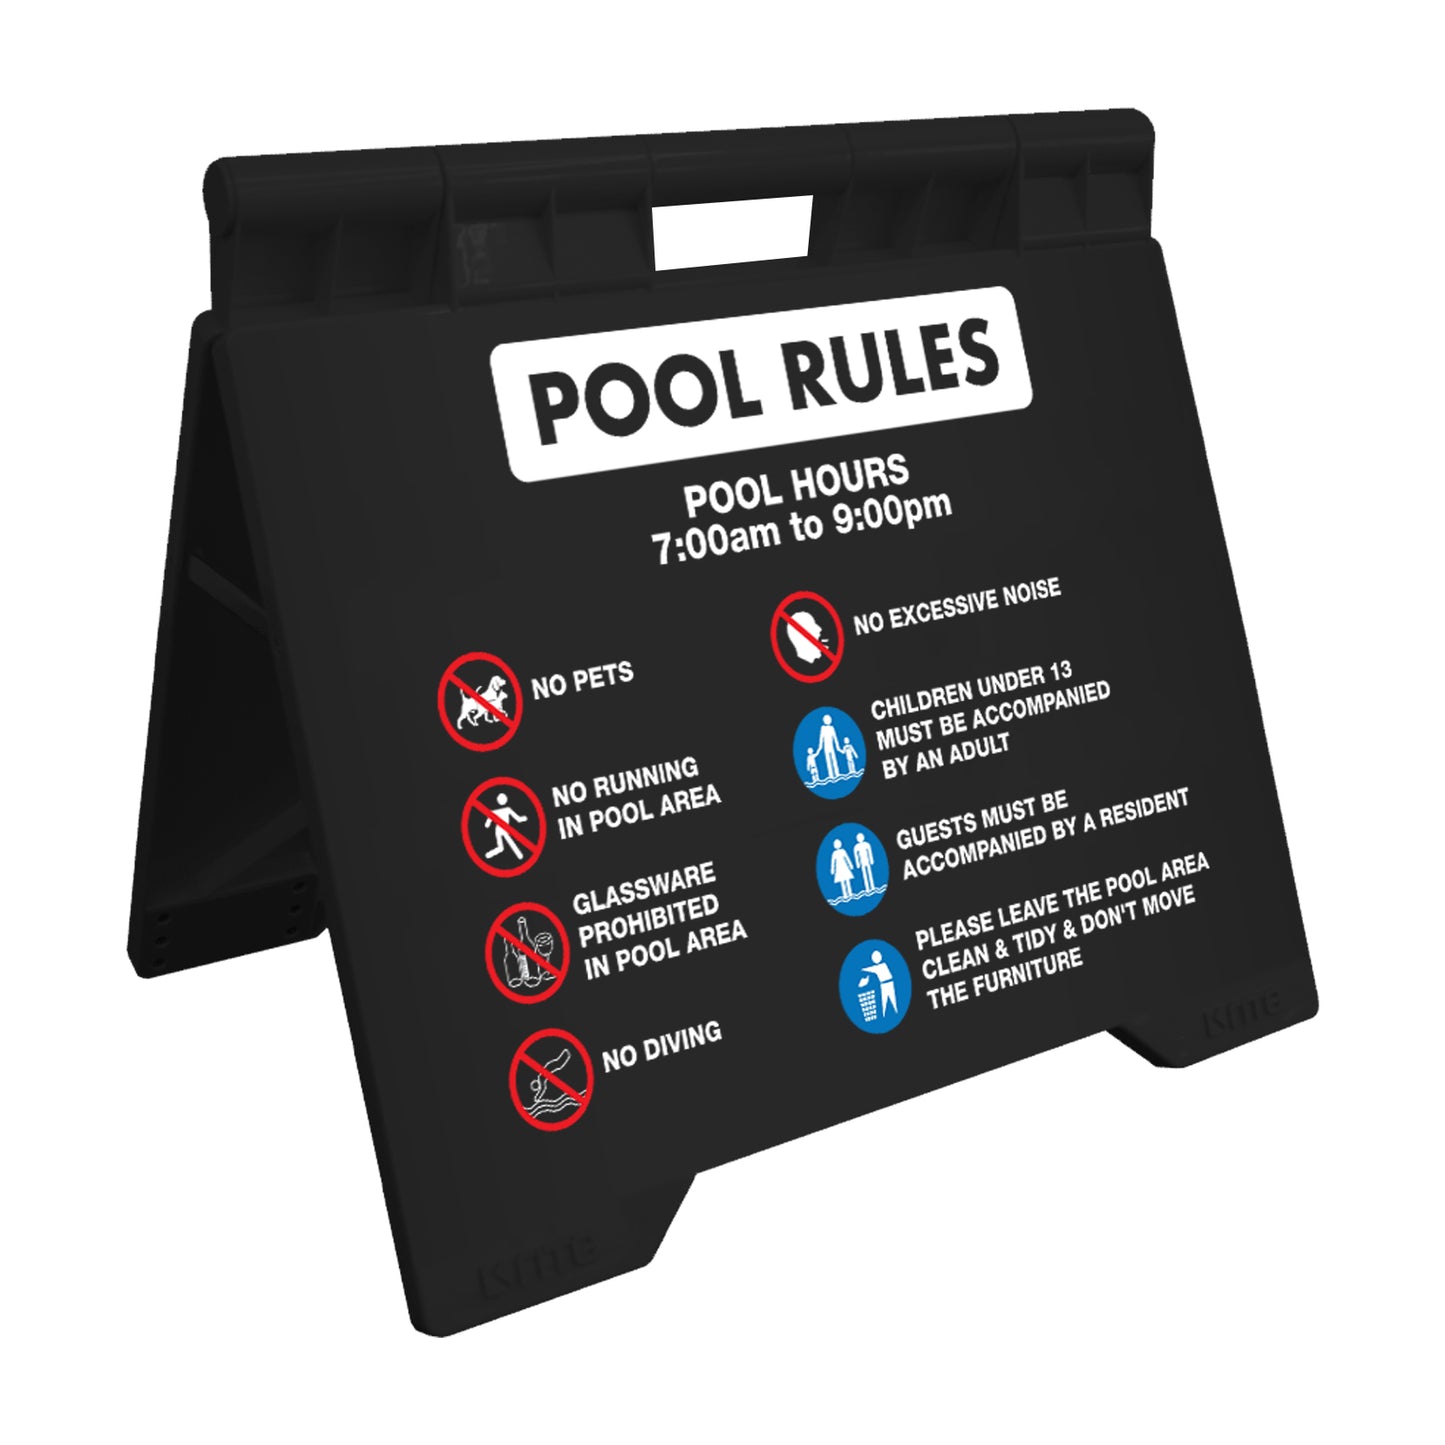 Pool Rules 1 Pool Hours 7am-9pm - Evarite A-Frame Sign